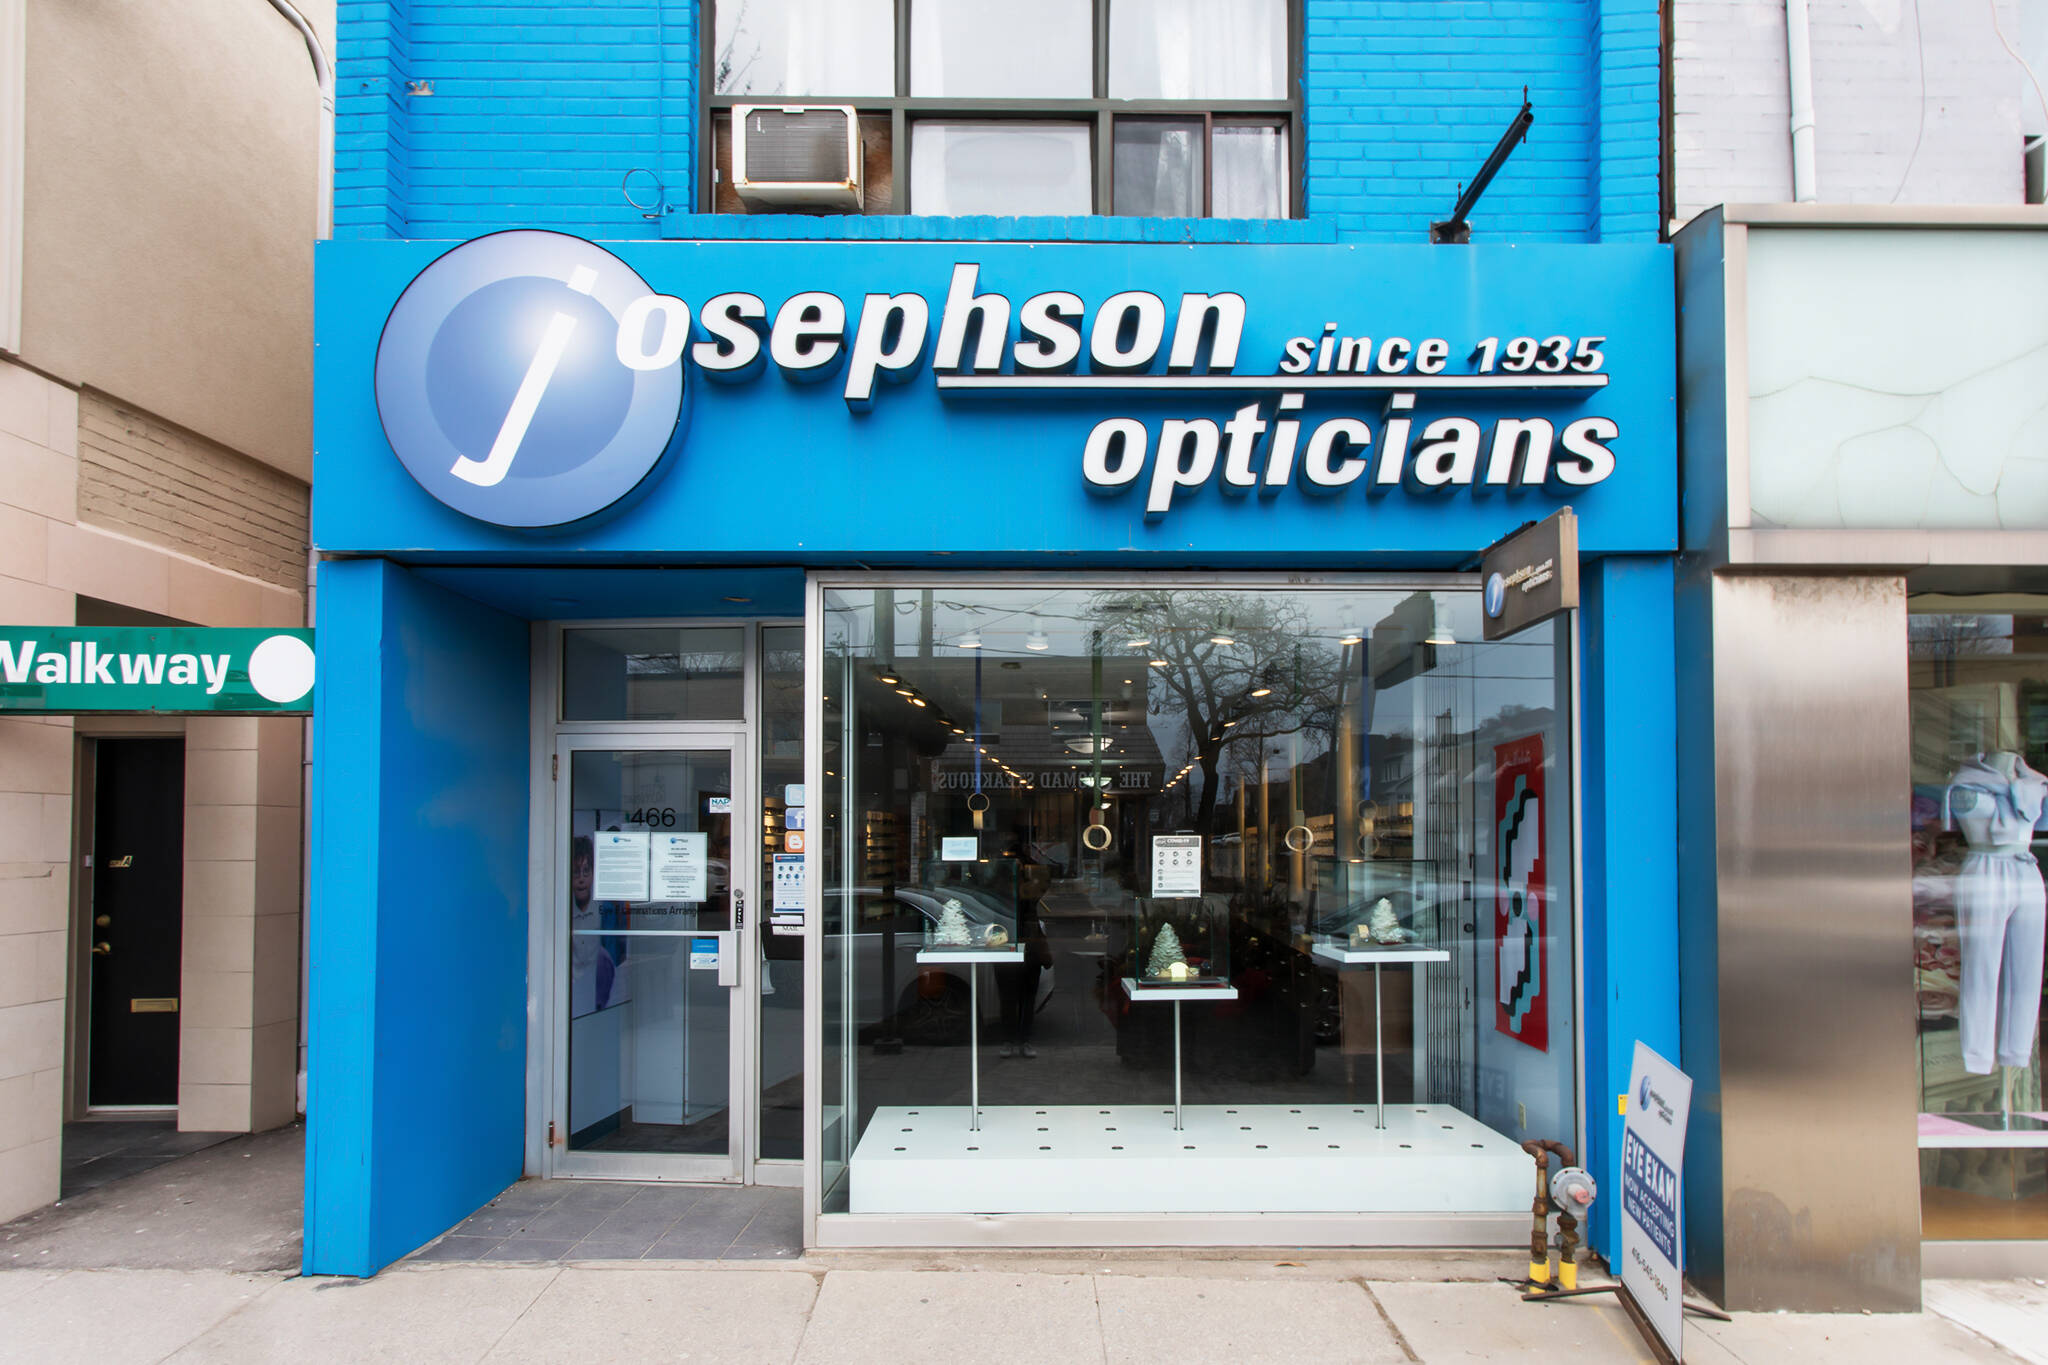 josephson opticians toronto